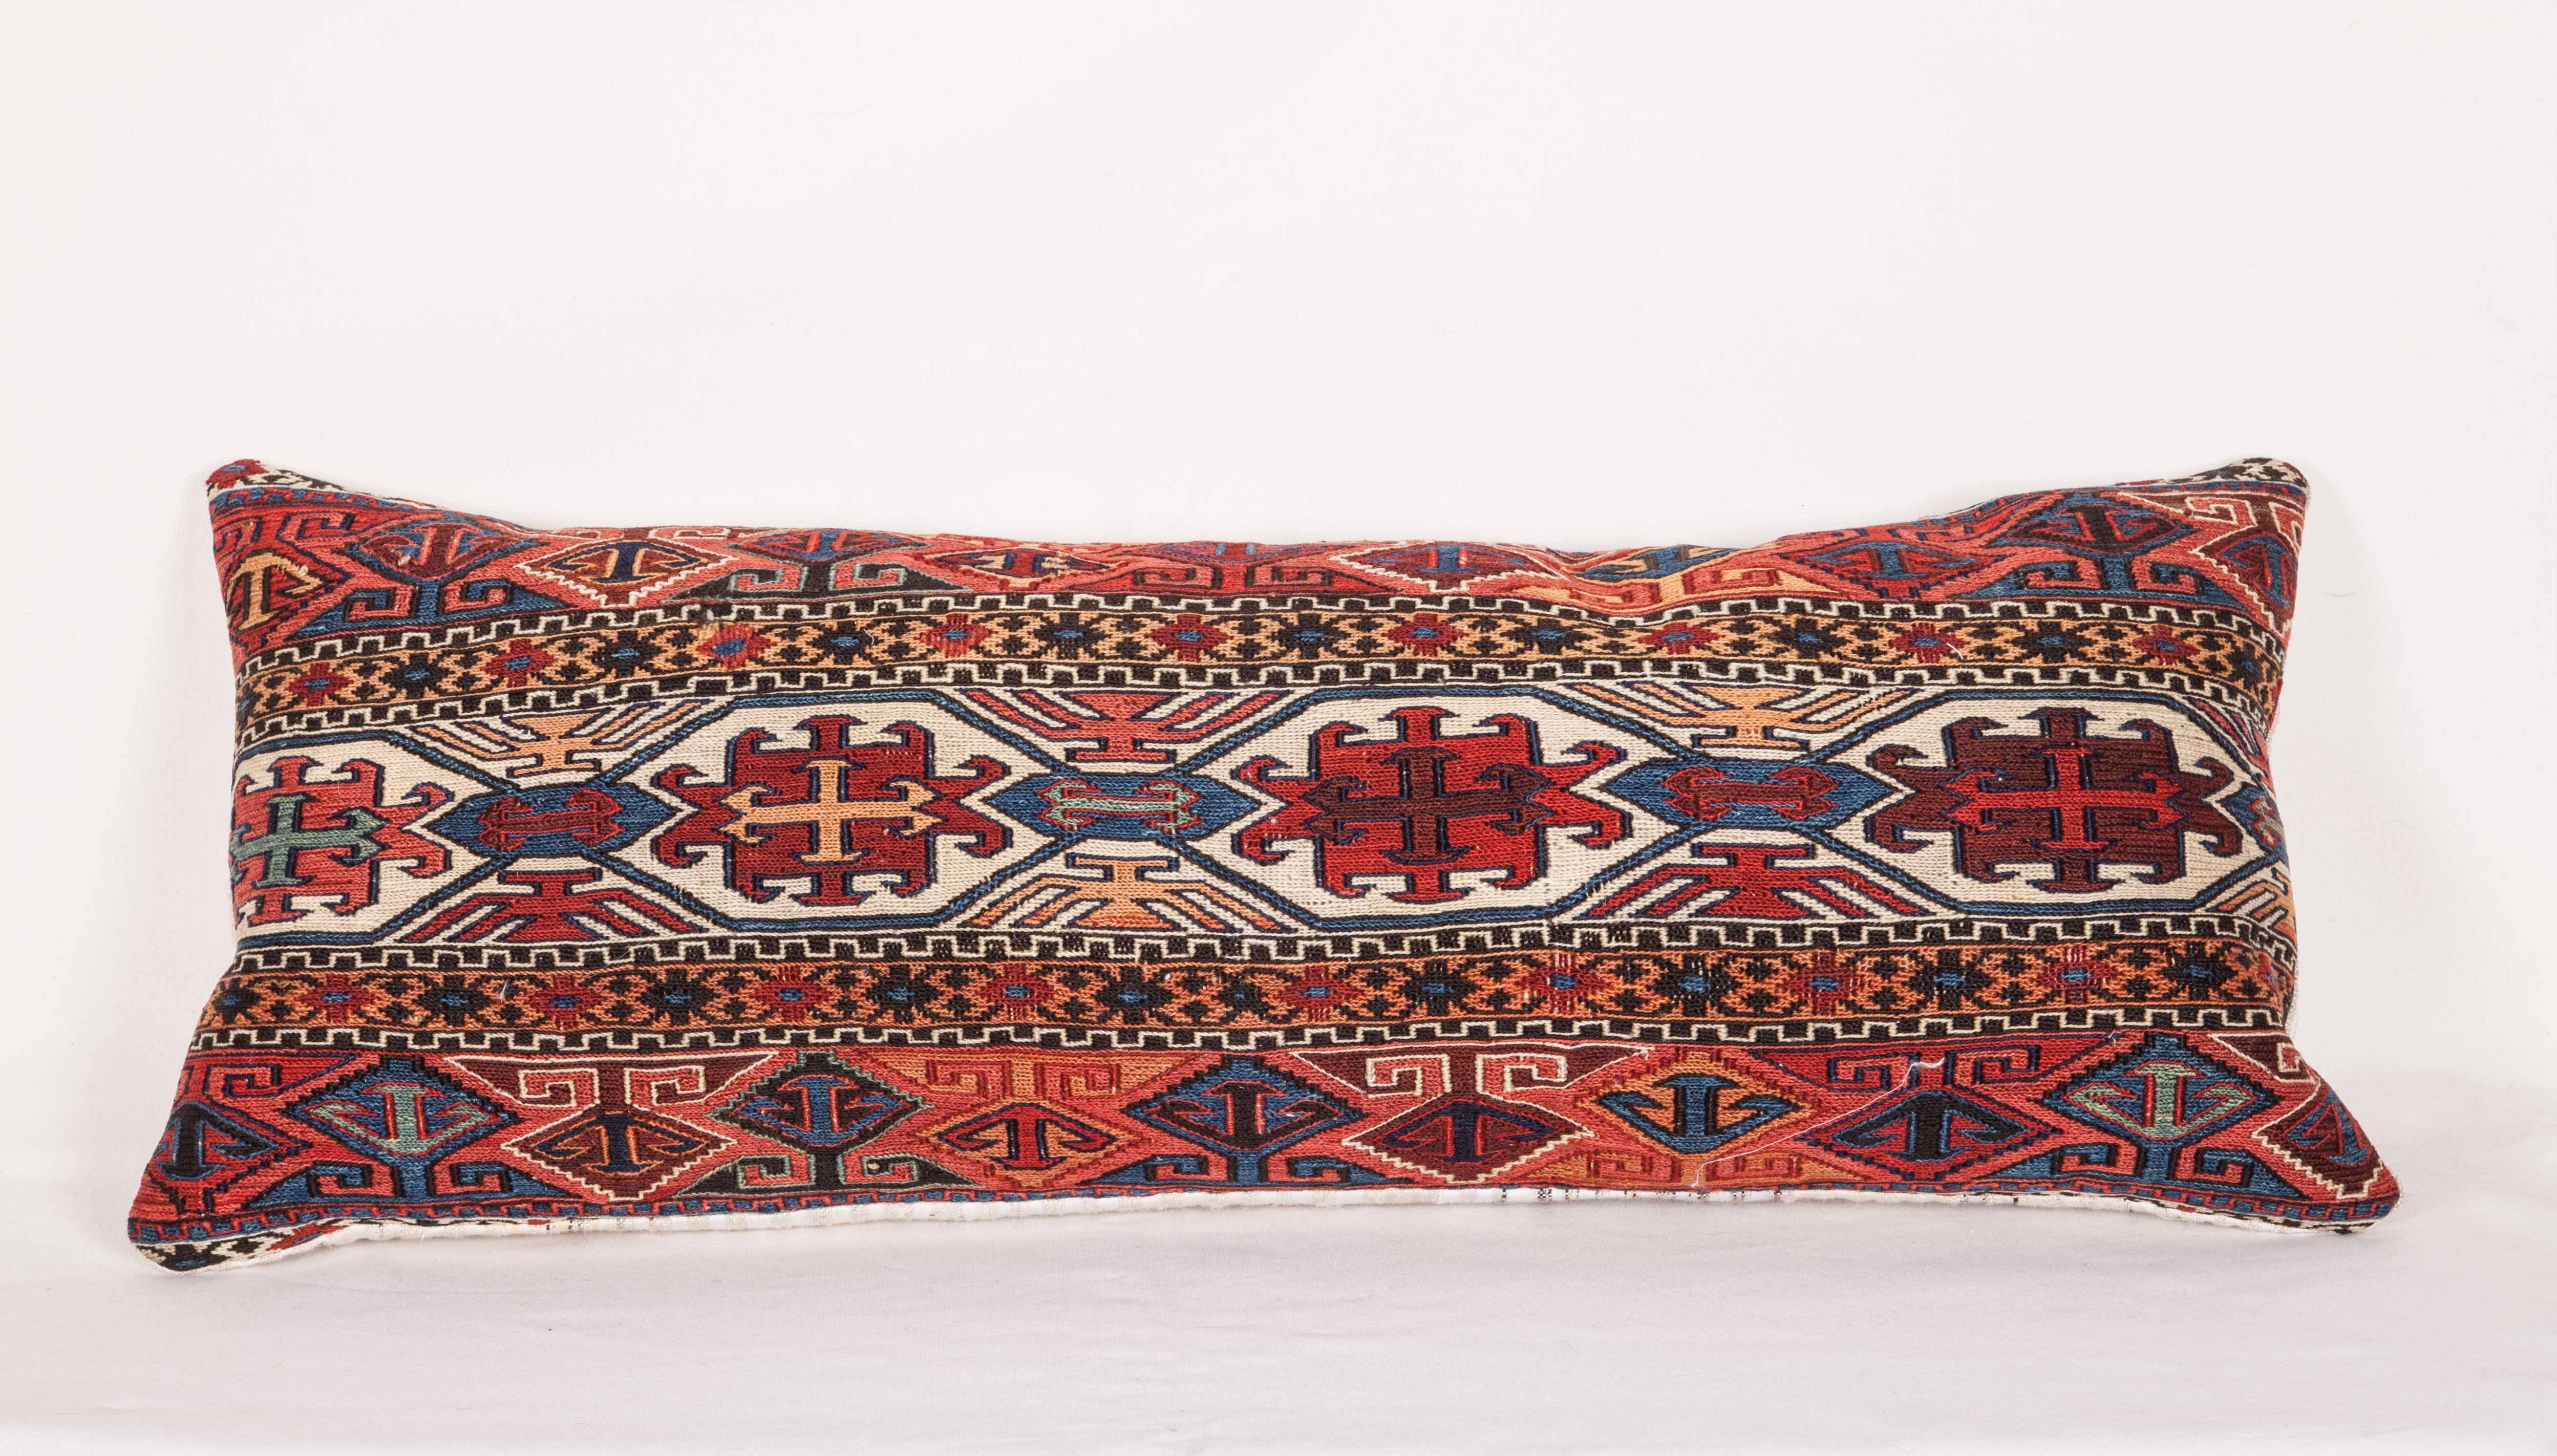 Persian Antique Sumak Pillows Made Out of Late 19th Century Shasavan Mafrash Panels